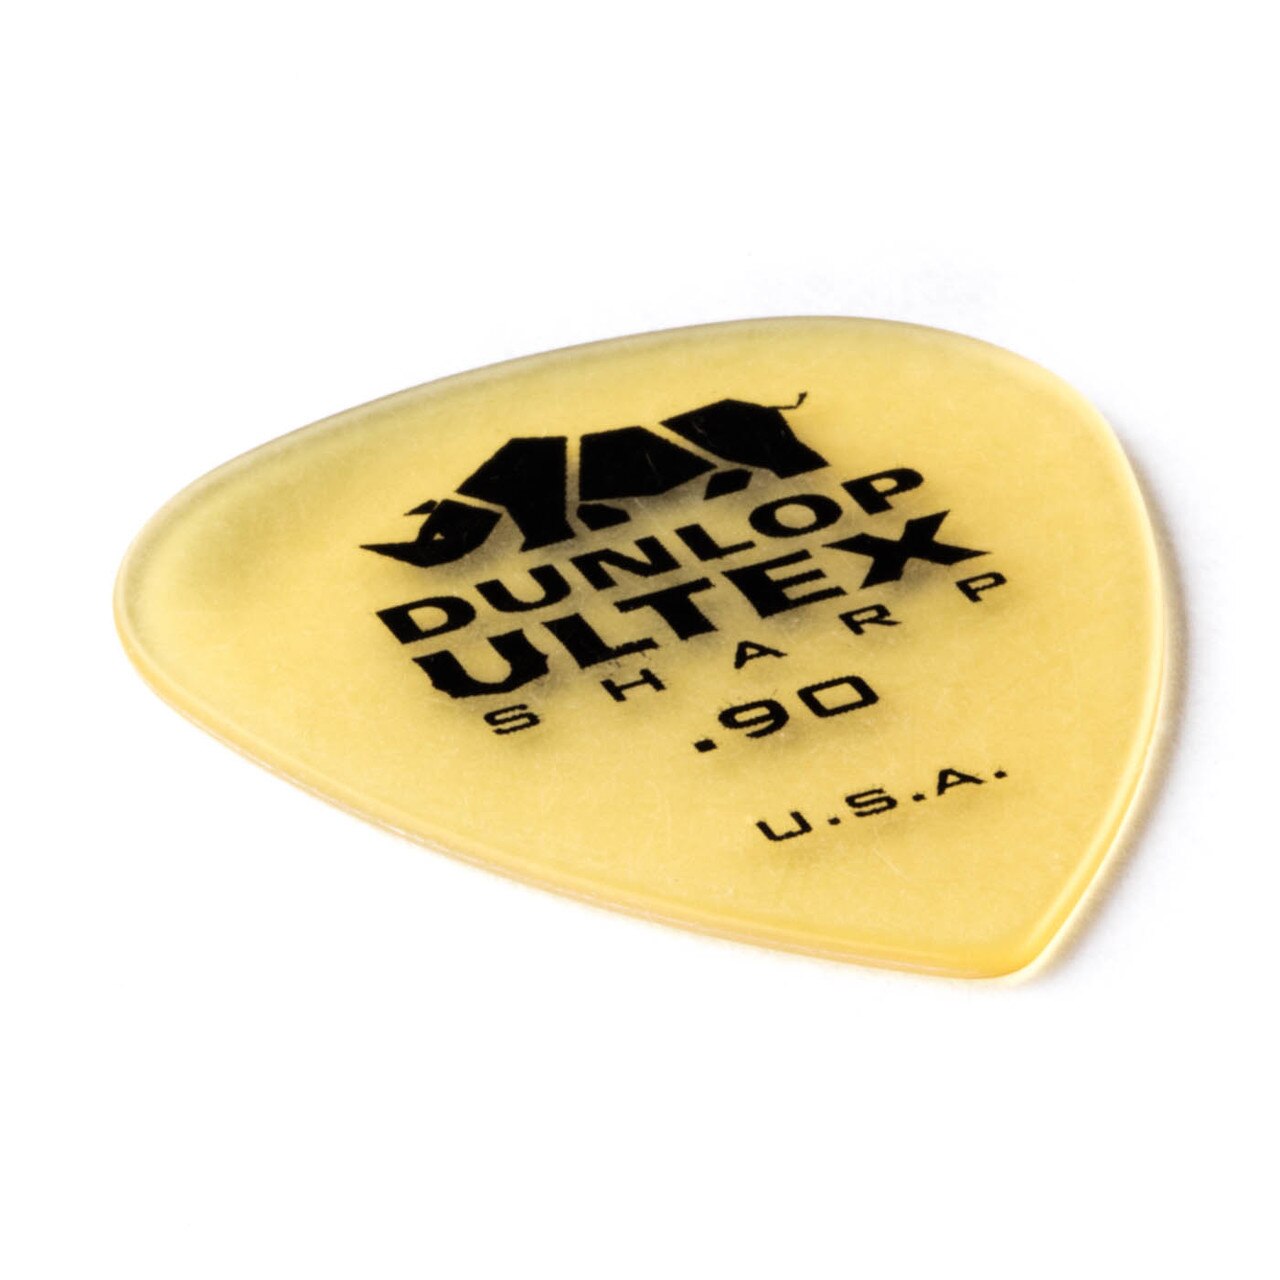 Jim Dunlop Ultex Sharp 433 0.90mm - MÉdiator & Onglet - Variation 1